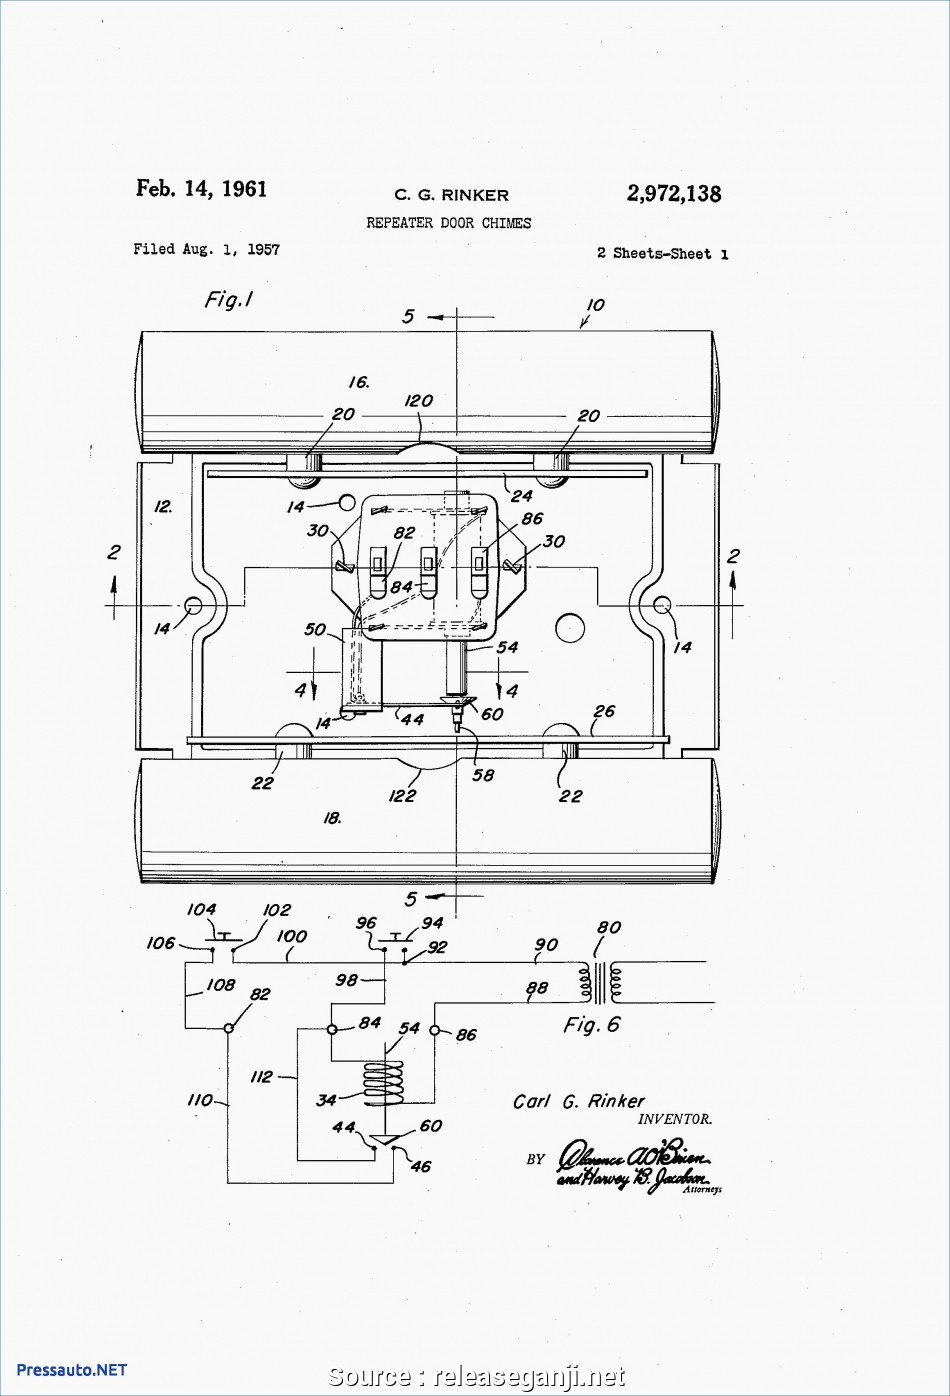 Doorbell Wiring Schematic Diagram - All Wiring Diagram - Doorbell Wiring Diagram Two Chimes